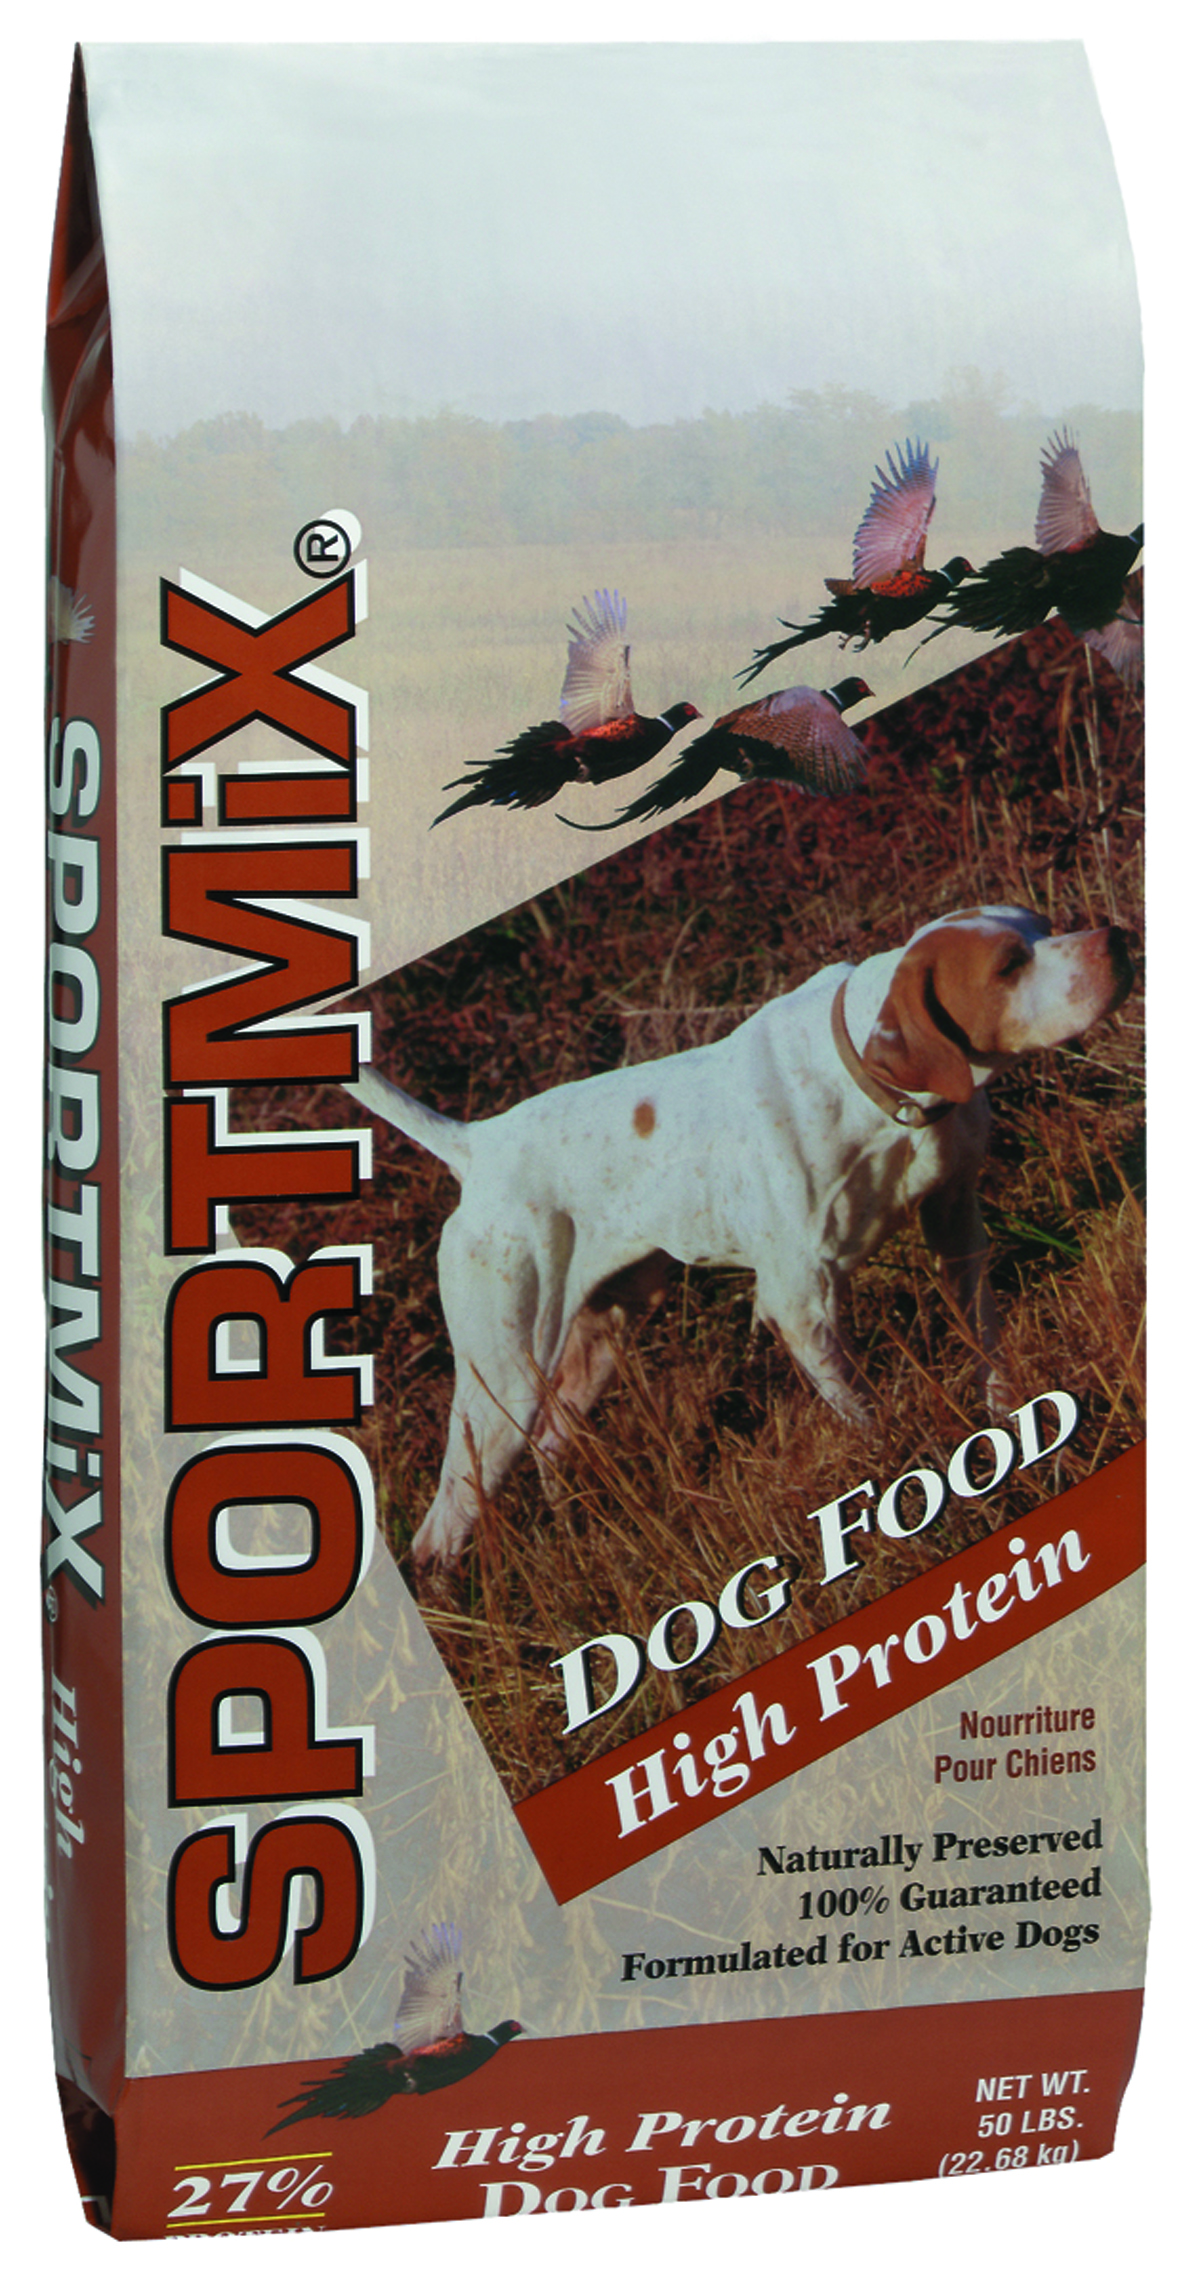 Sportmix Hi-Protein Dog Food - 50lbs.